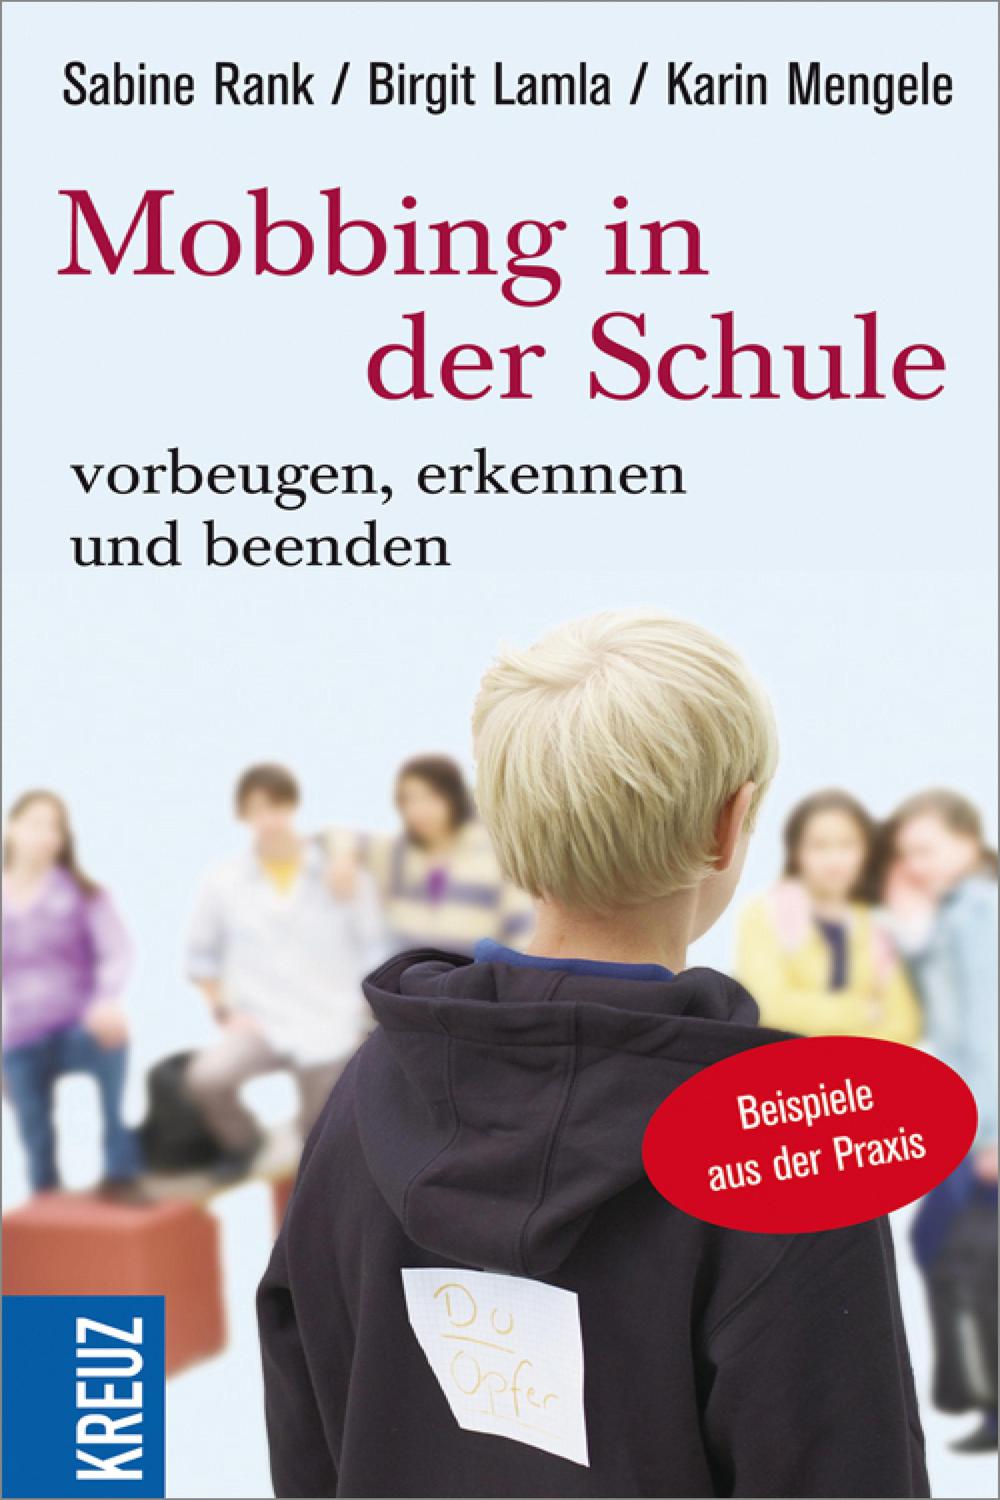 Mobbing in der Schule - Vorbeugen, erkennen und beenden - Sabine Rank, Karin Mengele, Birgit Lamla